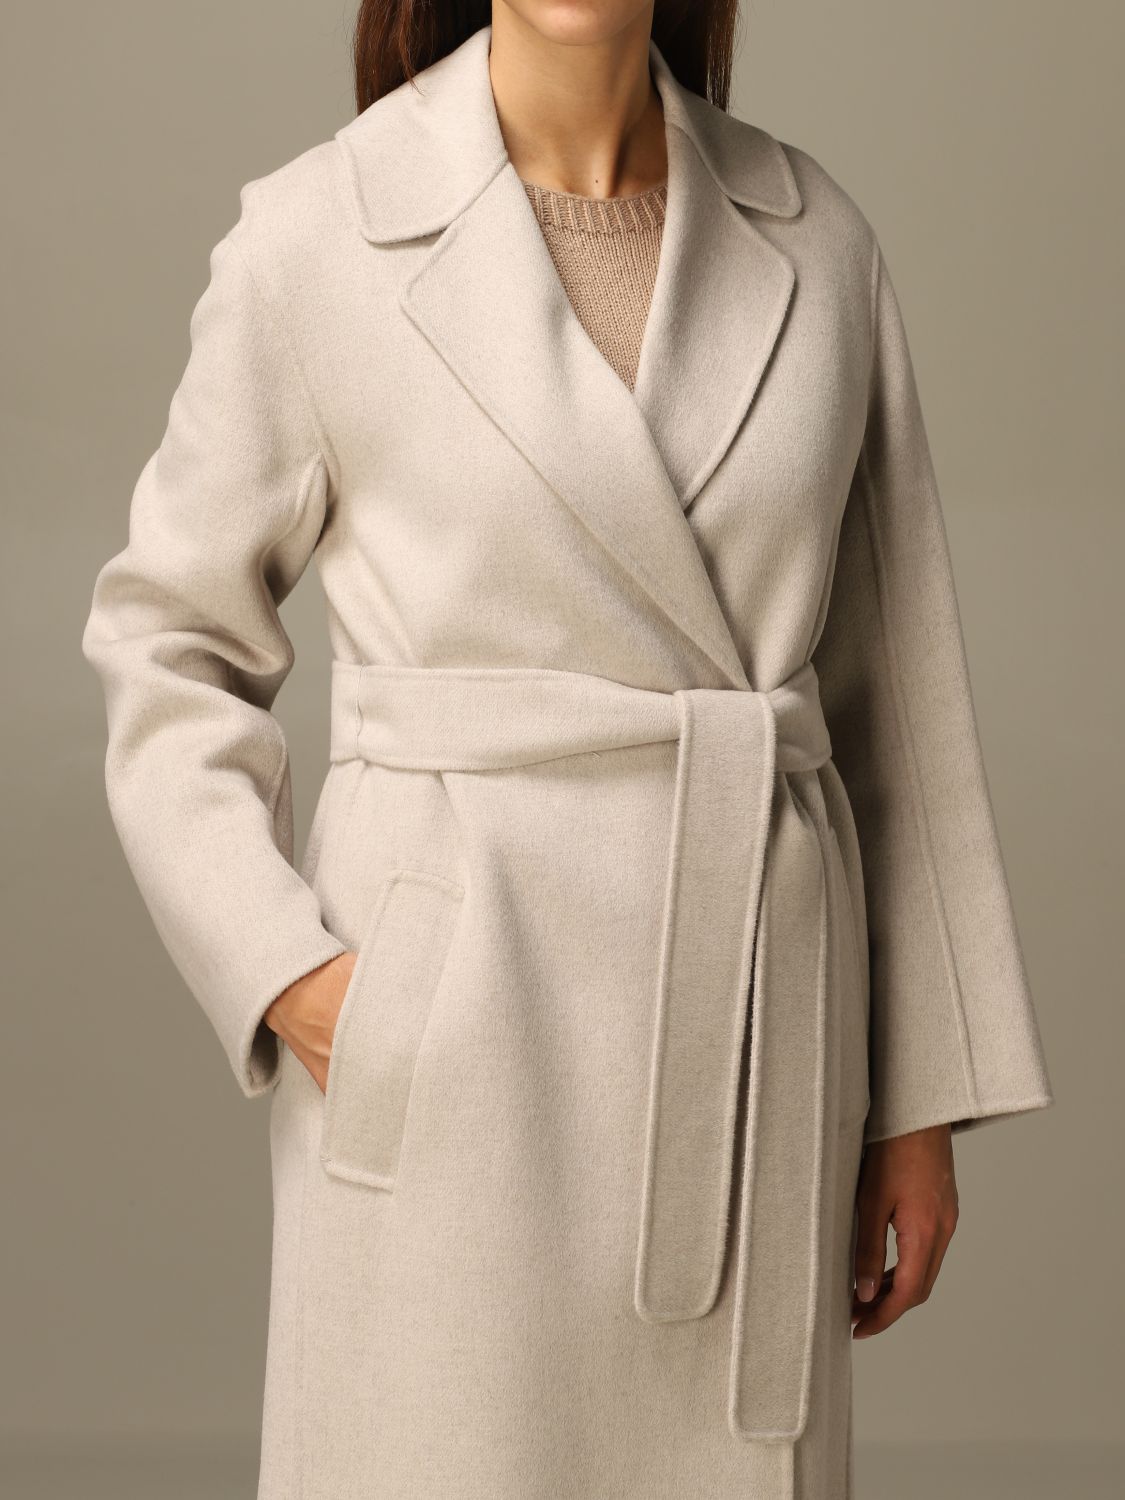 S MAX MARA: Lugano coat in virgin wool | Coat S Max Mara Women Mastic ...